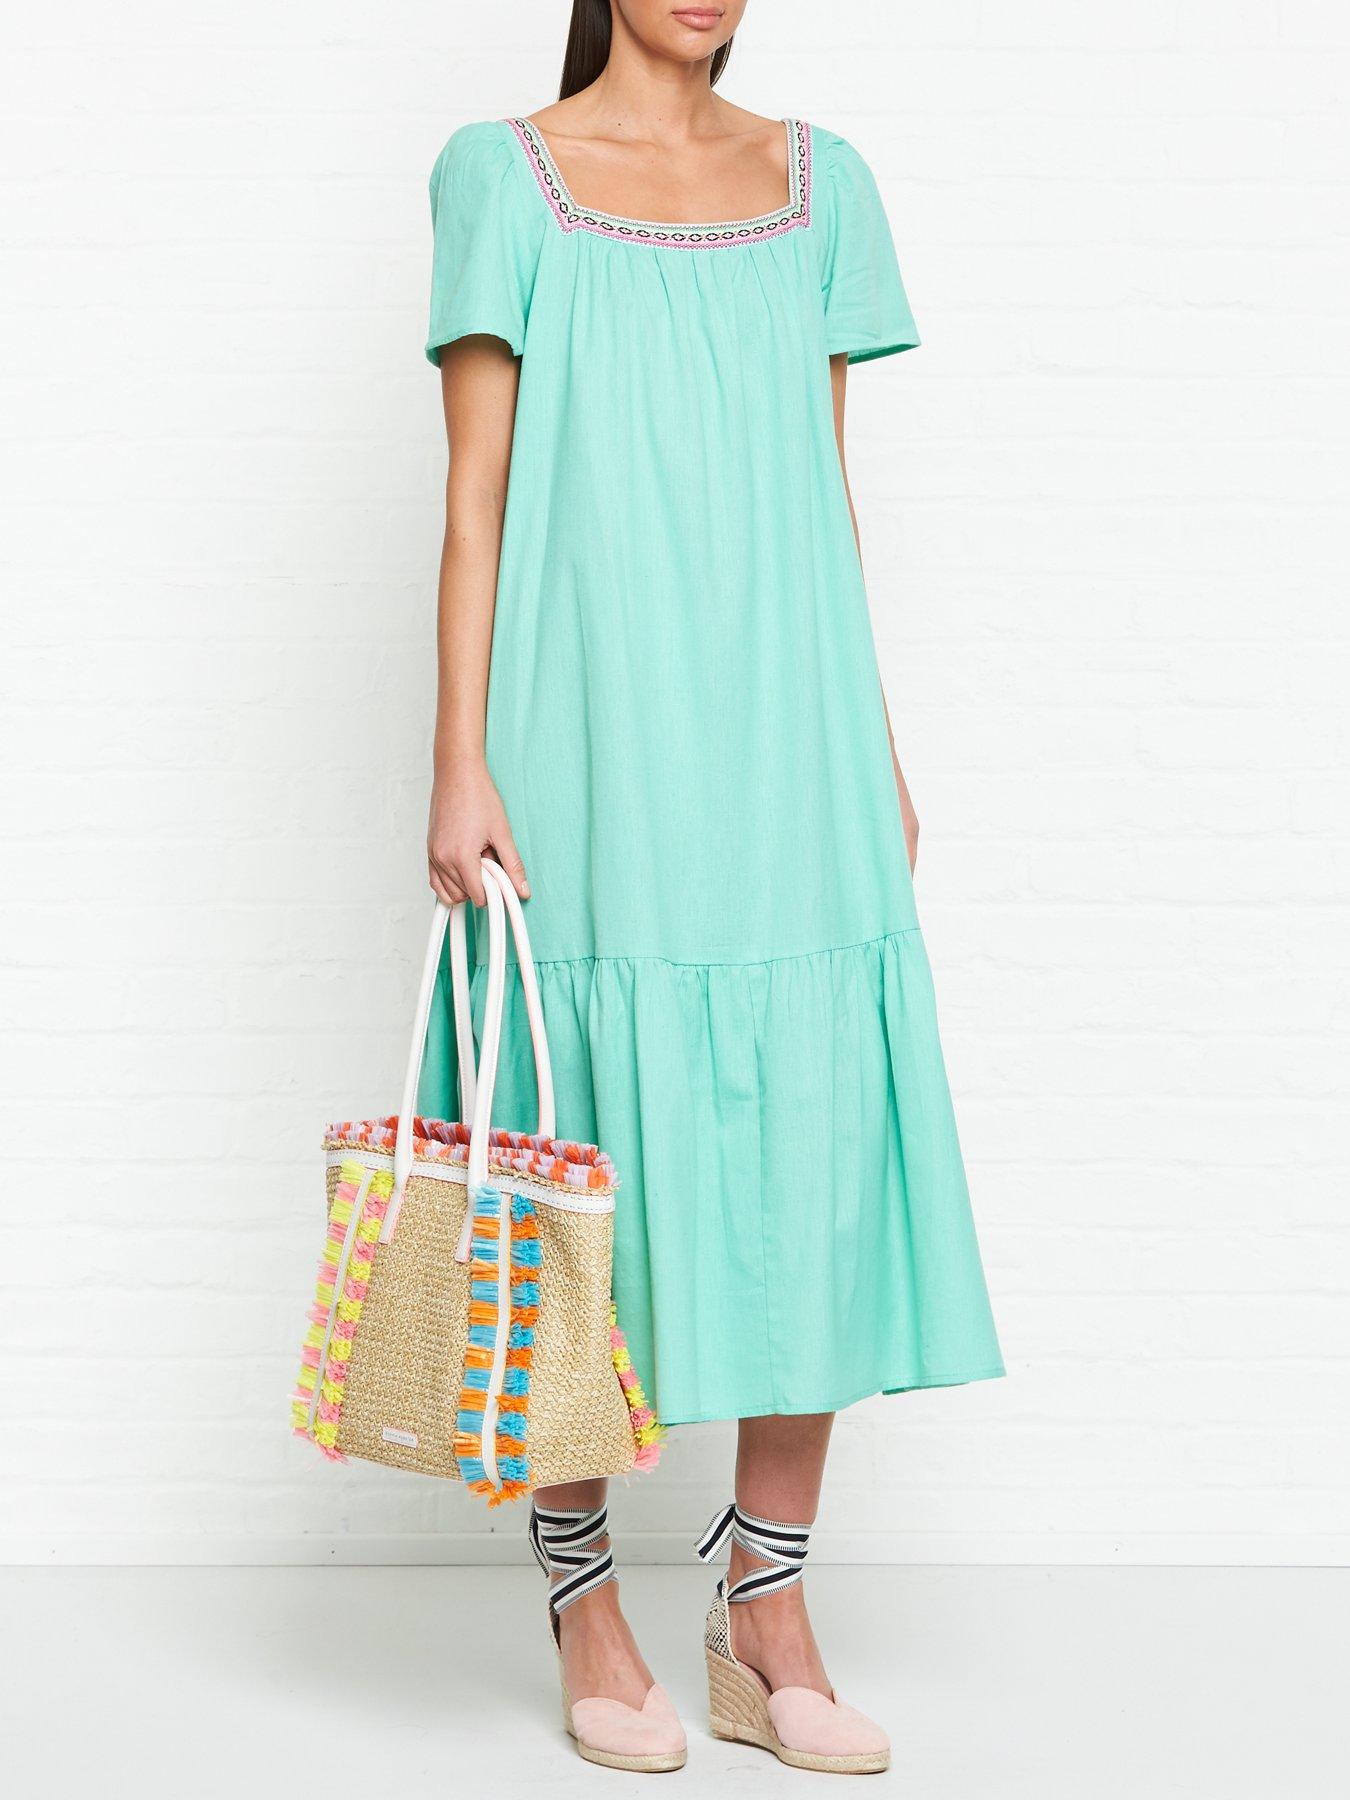 Designer Summer Dresses Uk Cheap Sale ...